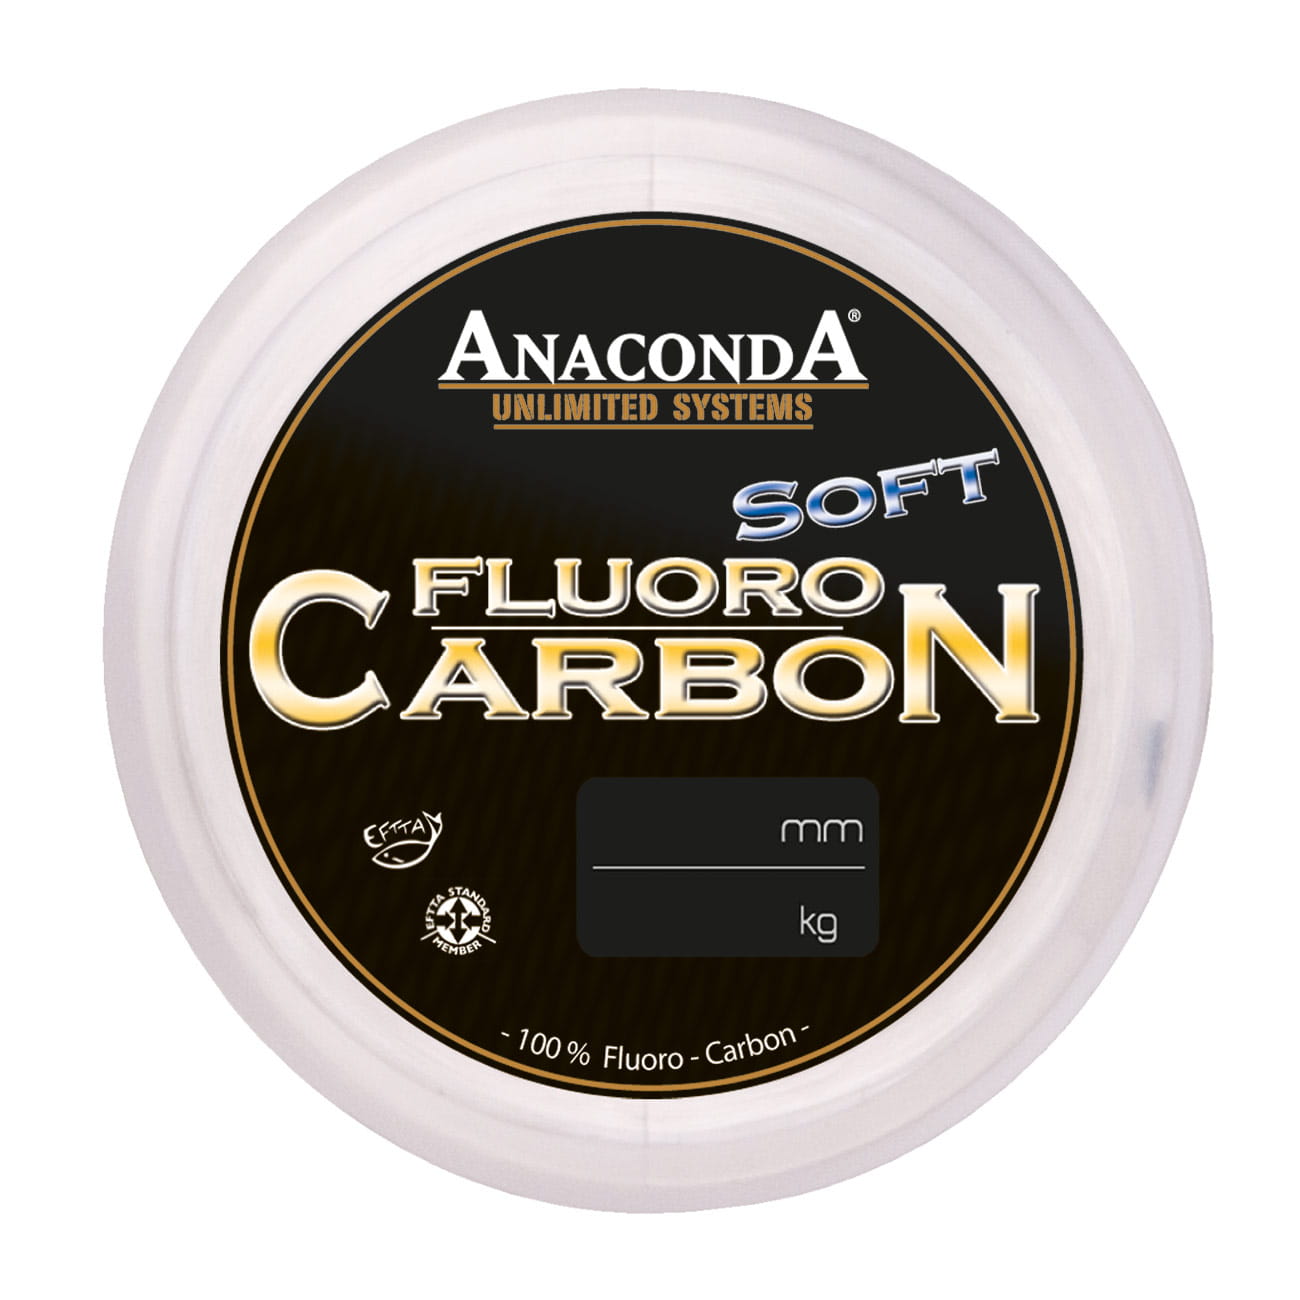 Anaconda Fluoro Carbon Soft 50m